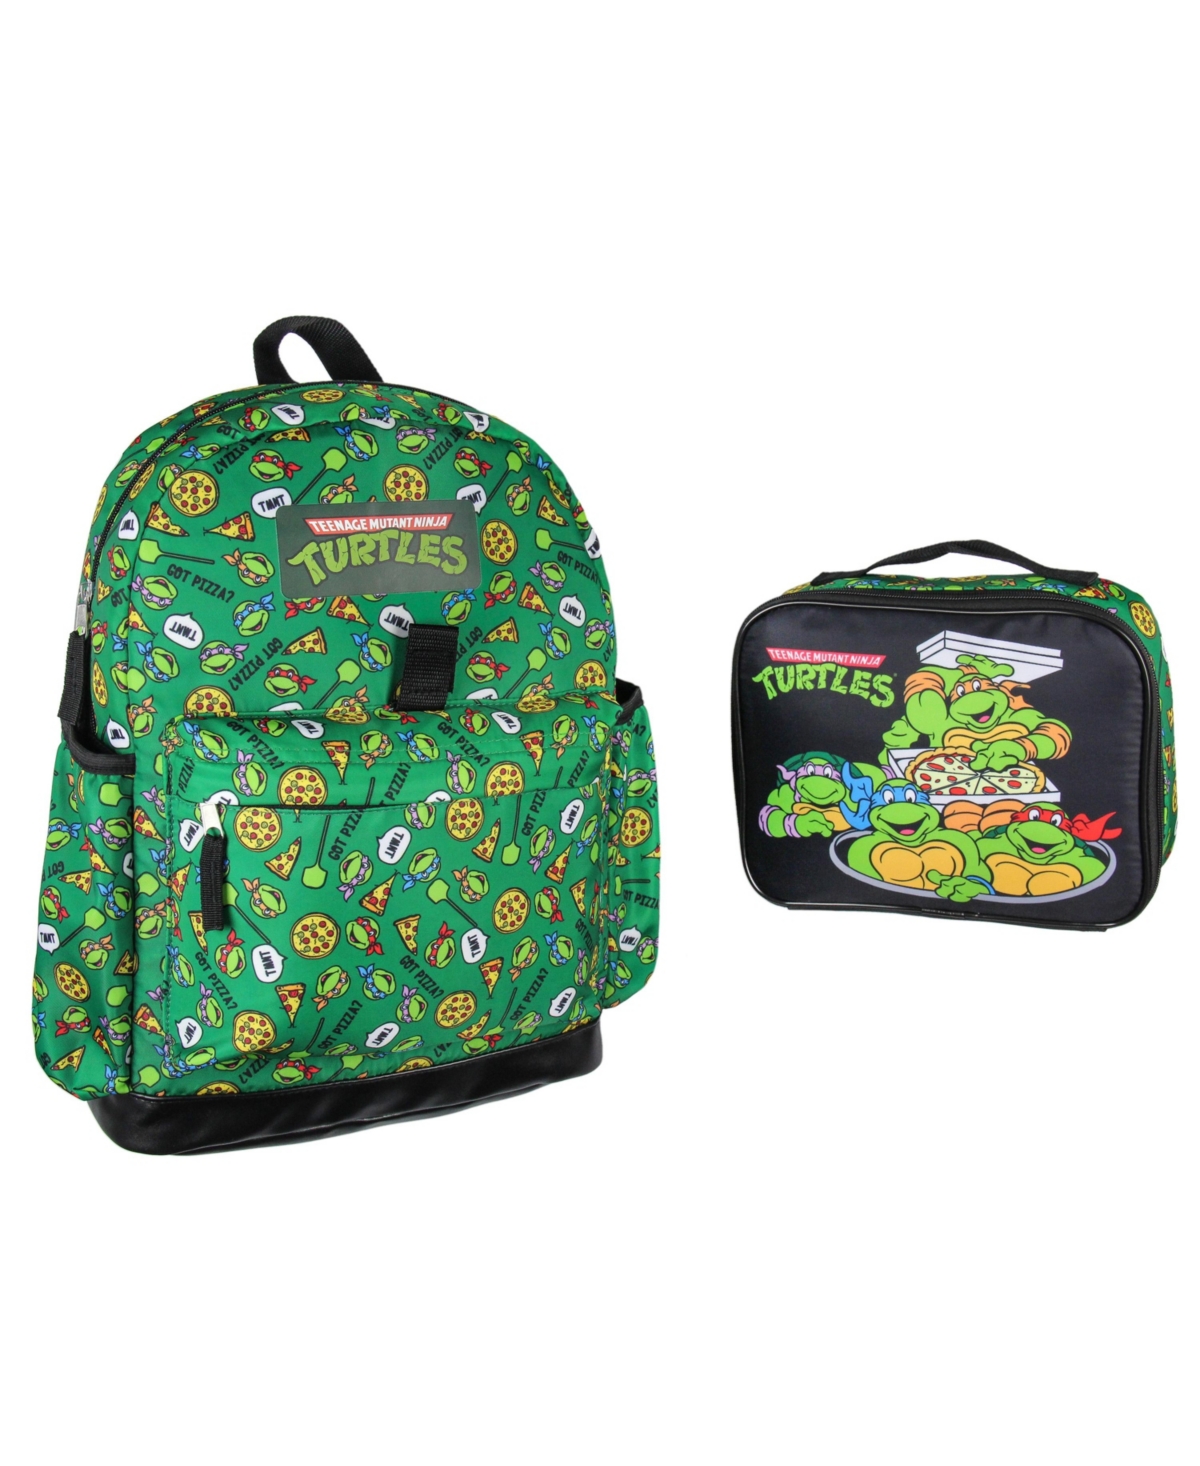 Nickelodeon Got Pizza? Leonardo Raphael Donatello Michelangelo 2 Pc Lunch Box Backpack Set - Green